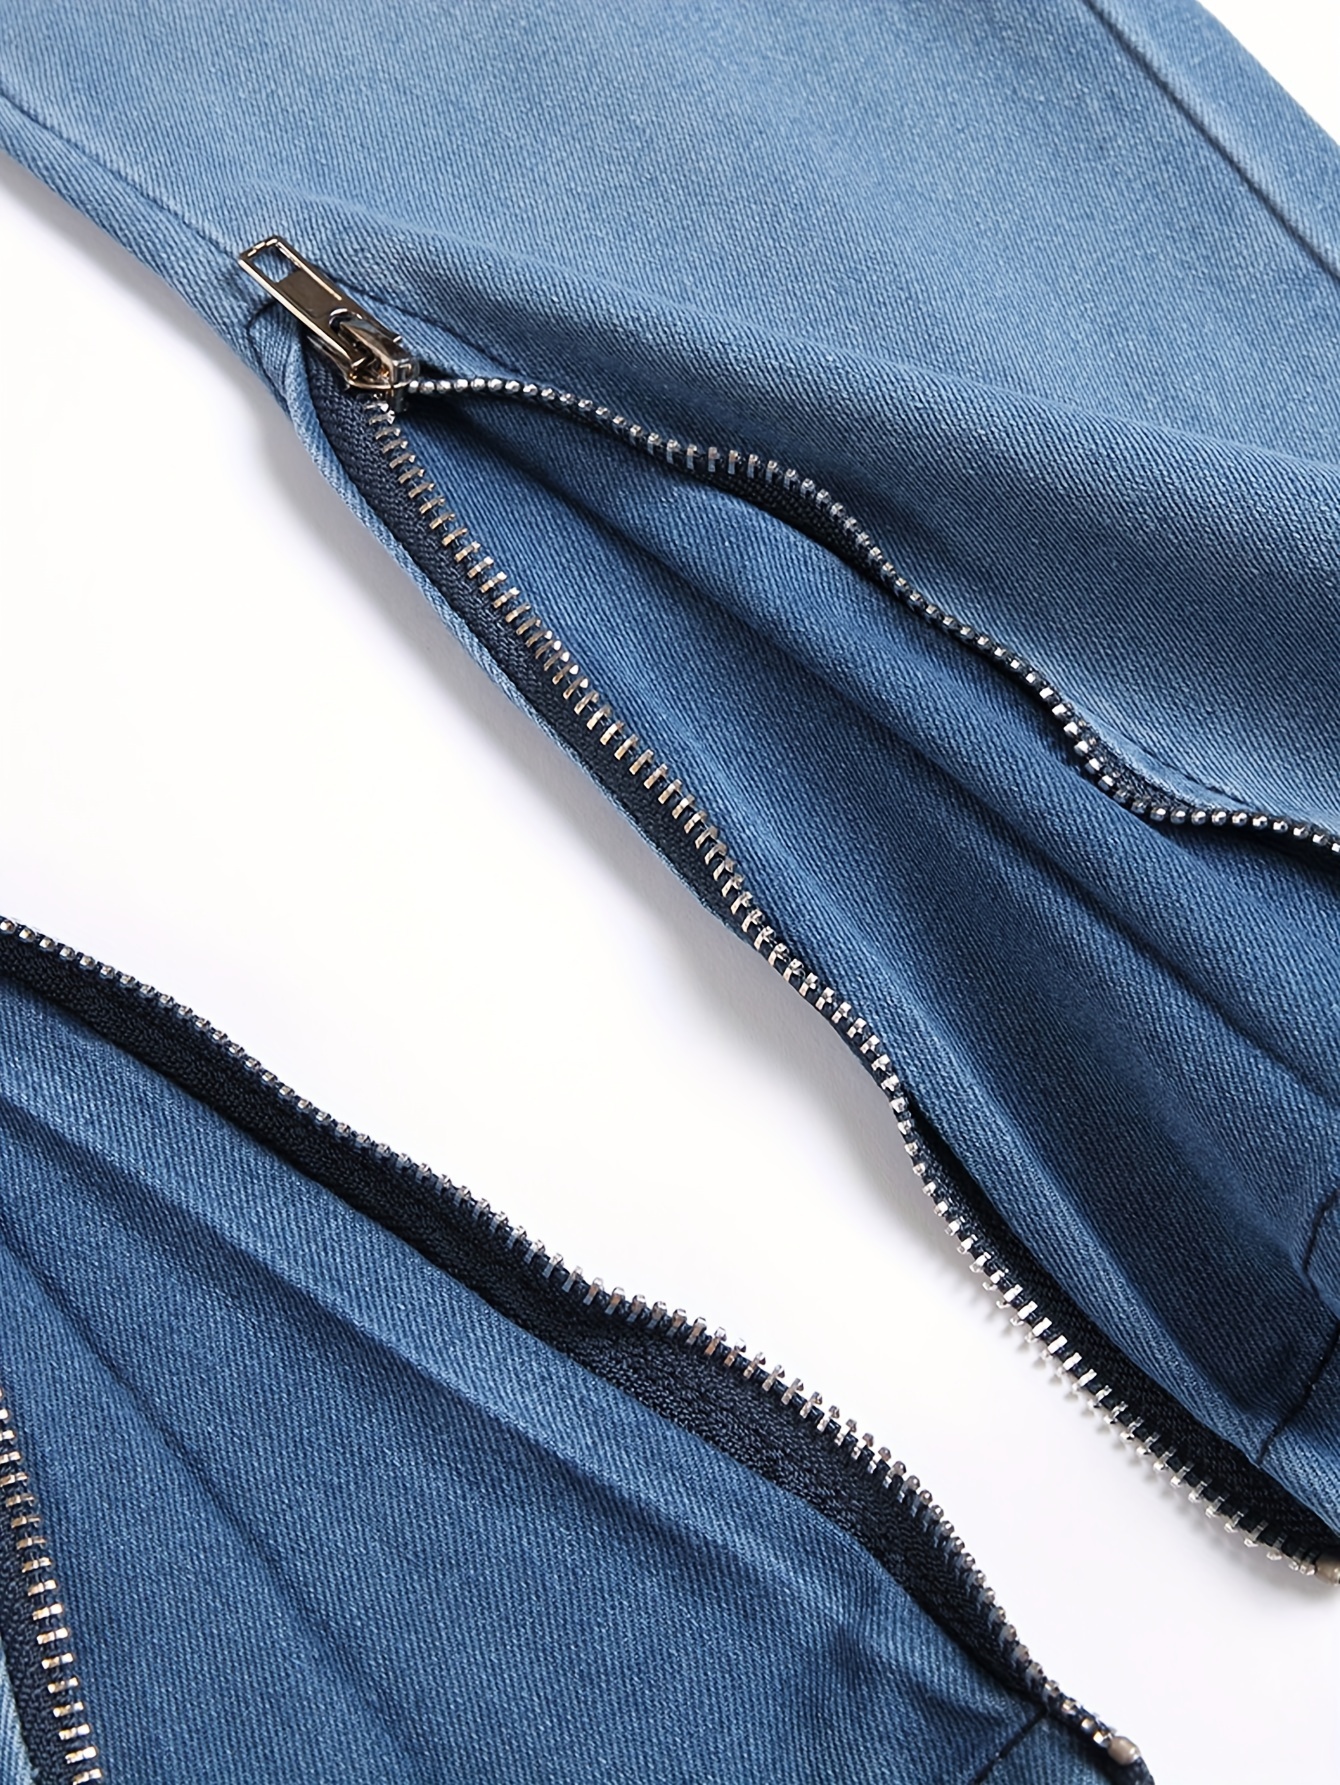 Light blue Men's Fashion Casual Solid Denim Straight Pants Zipper